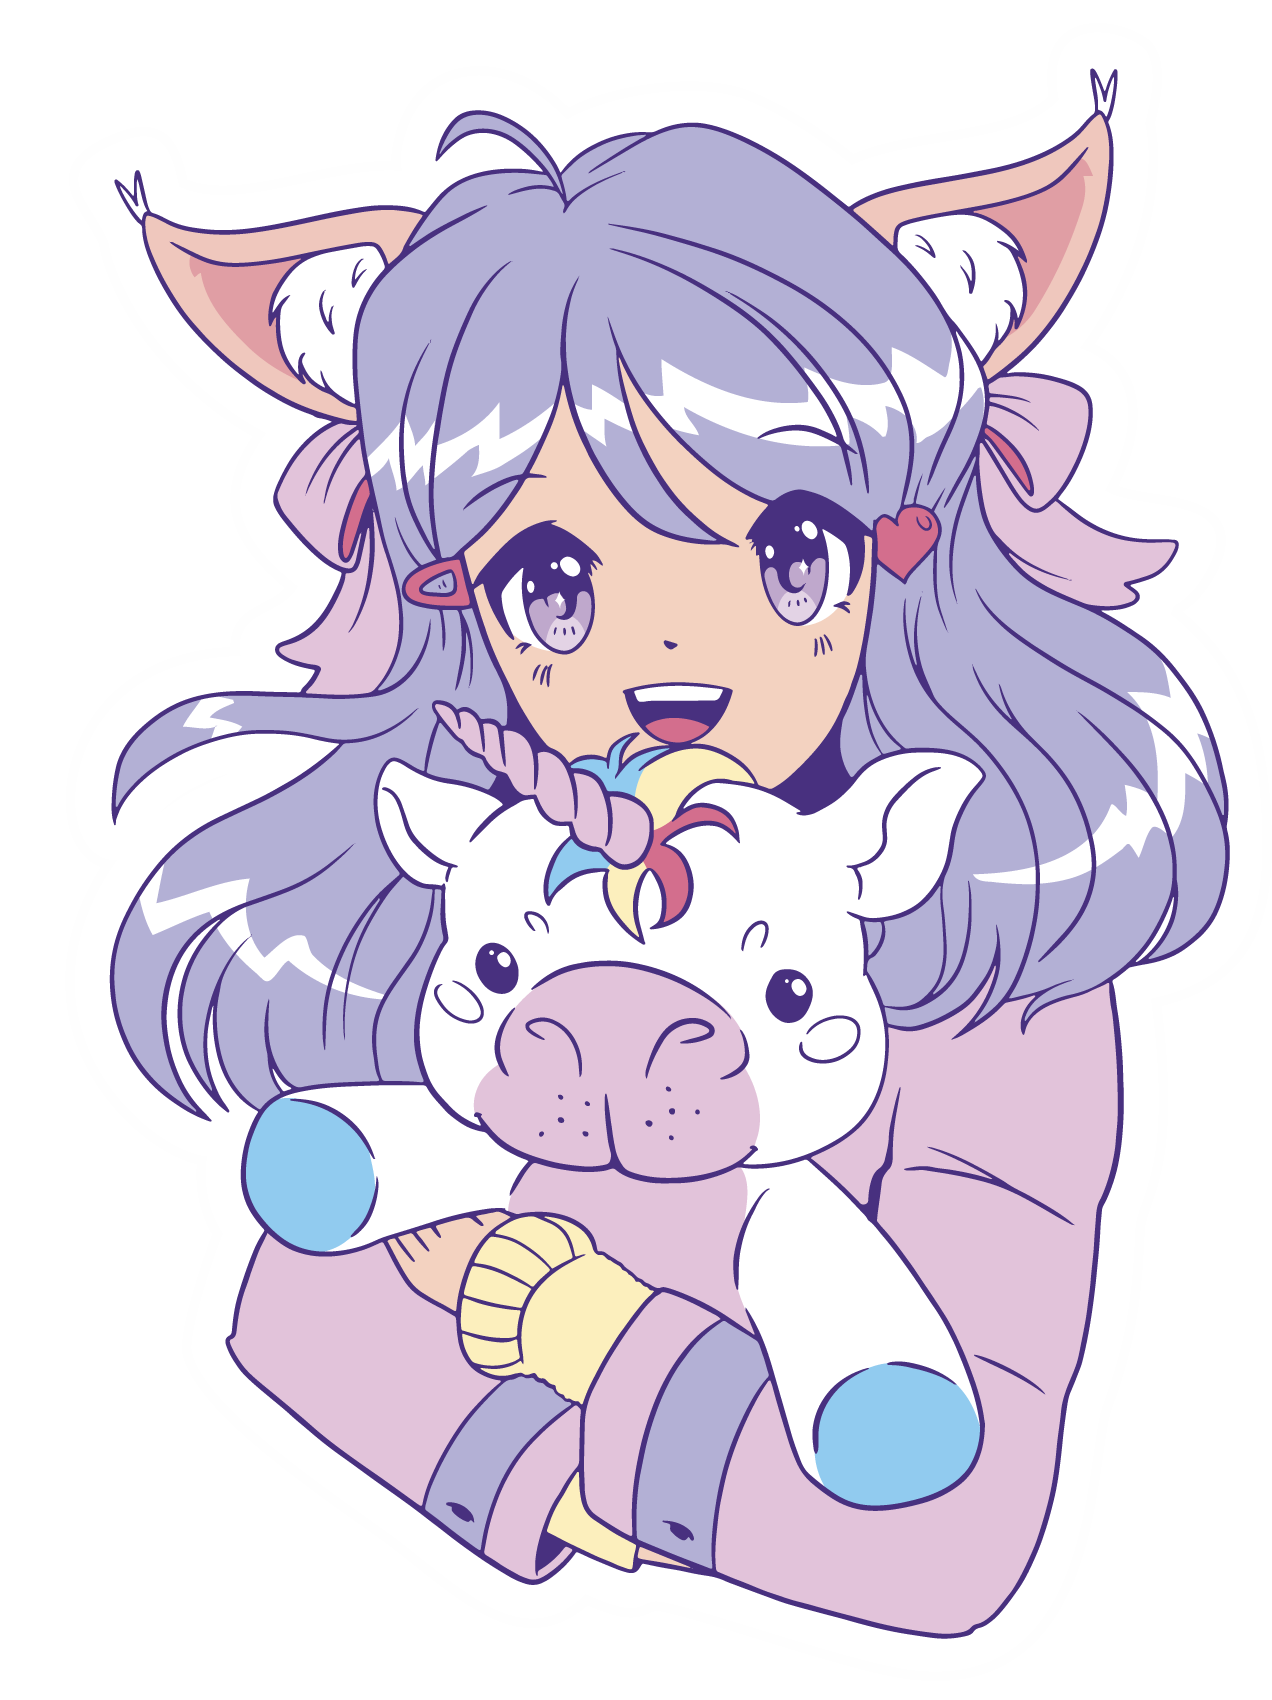 Lexica - Kawaii anime girl wearing a unicorn onesie